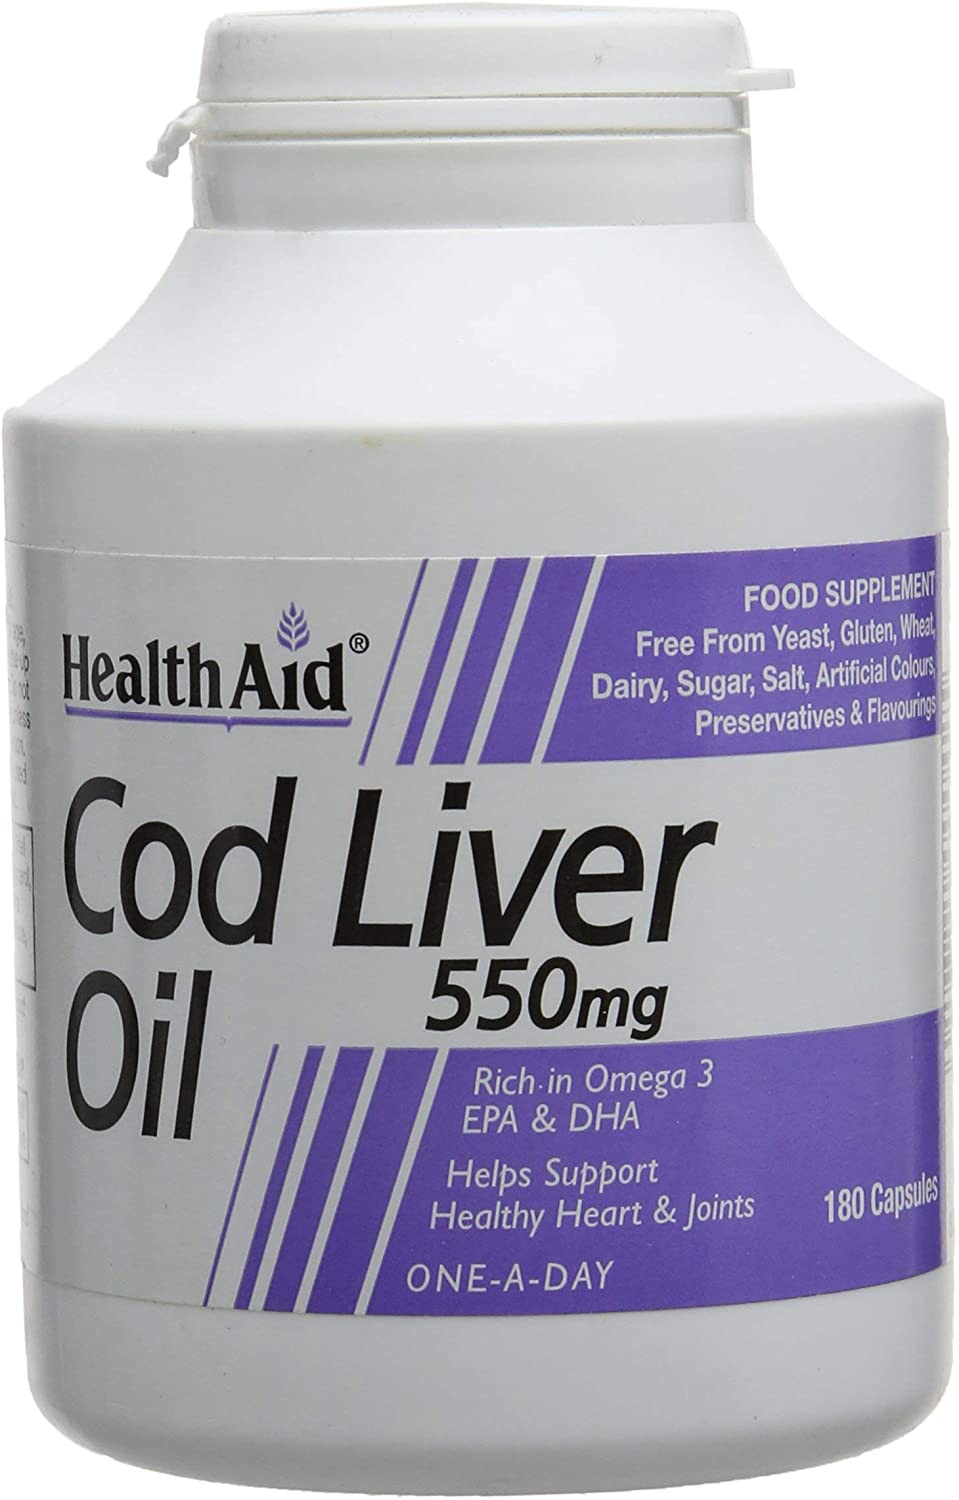 HealthAid Cod Liver Oil 550mg 180 Capsules